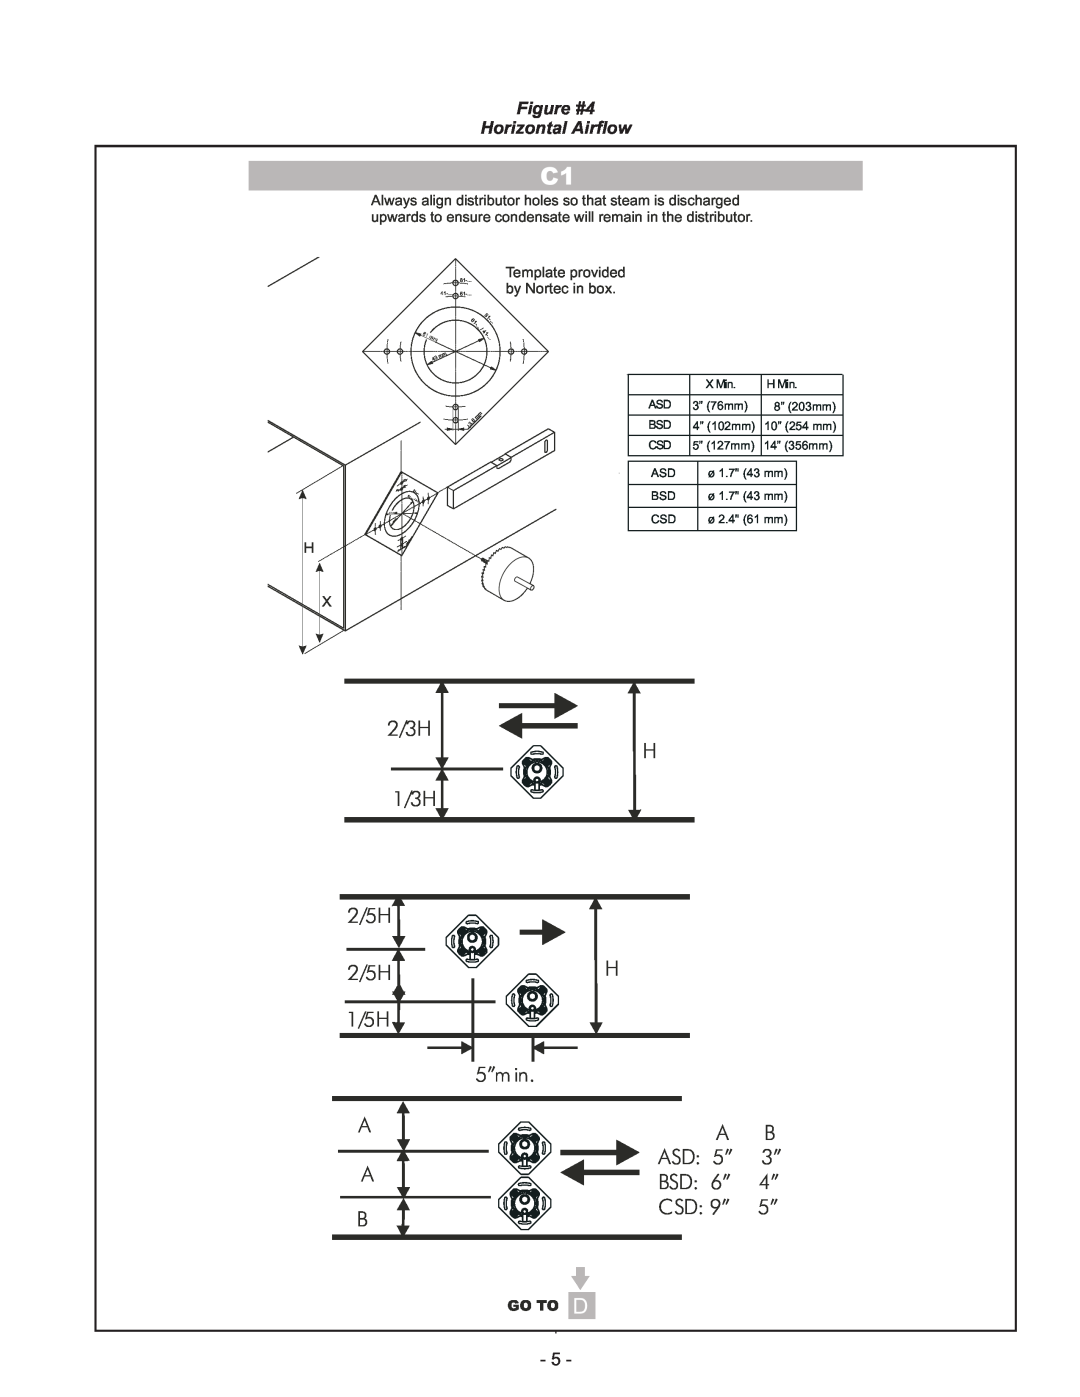 Nortec installation manual 2/3H 1/3H, 2/5H 2/5HH 1/5H 5”m in, ASD 5”, BSD 6”, CSD 9” 